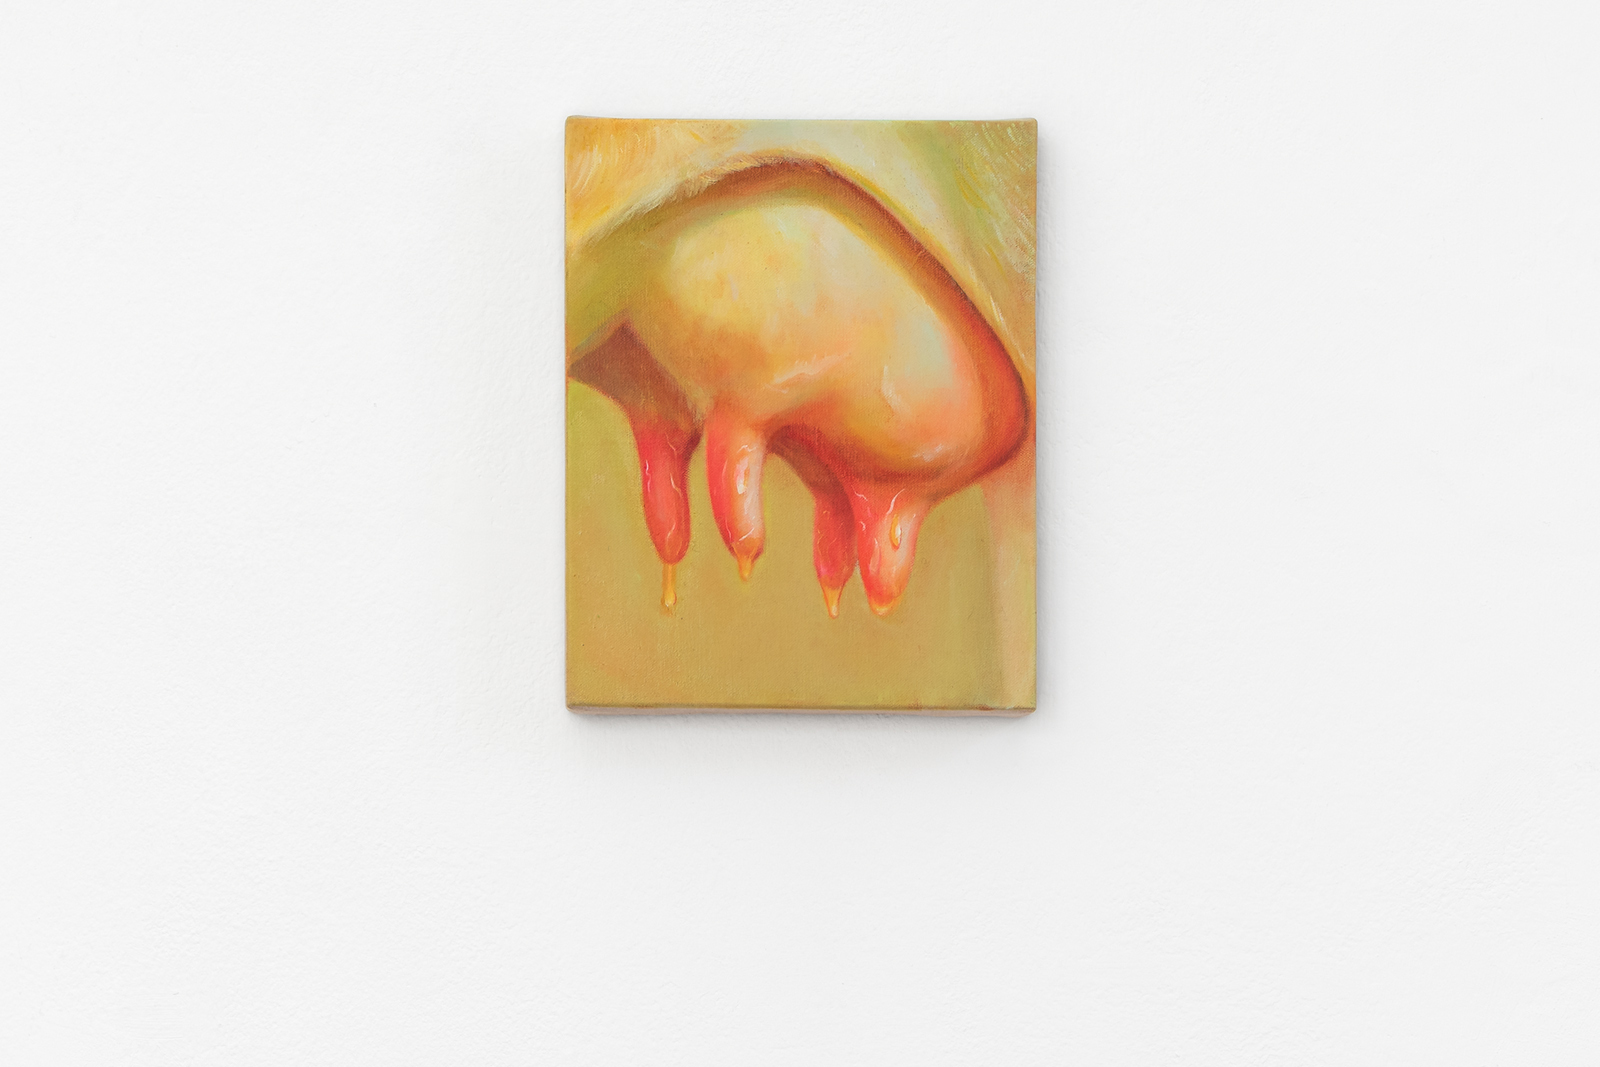 Tao Siqi, Feed, 2022 Oil on canvas, 30 x 24 cm